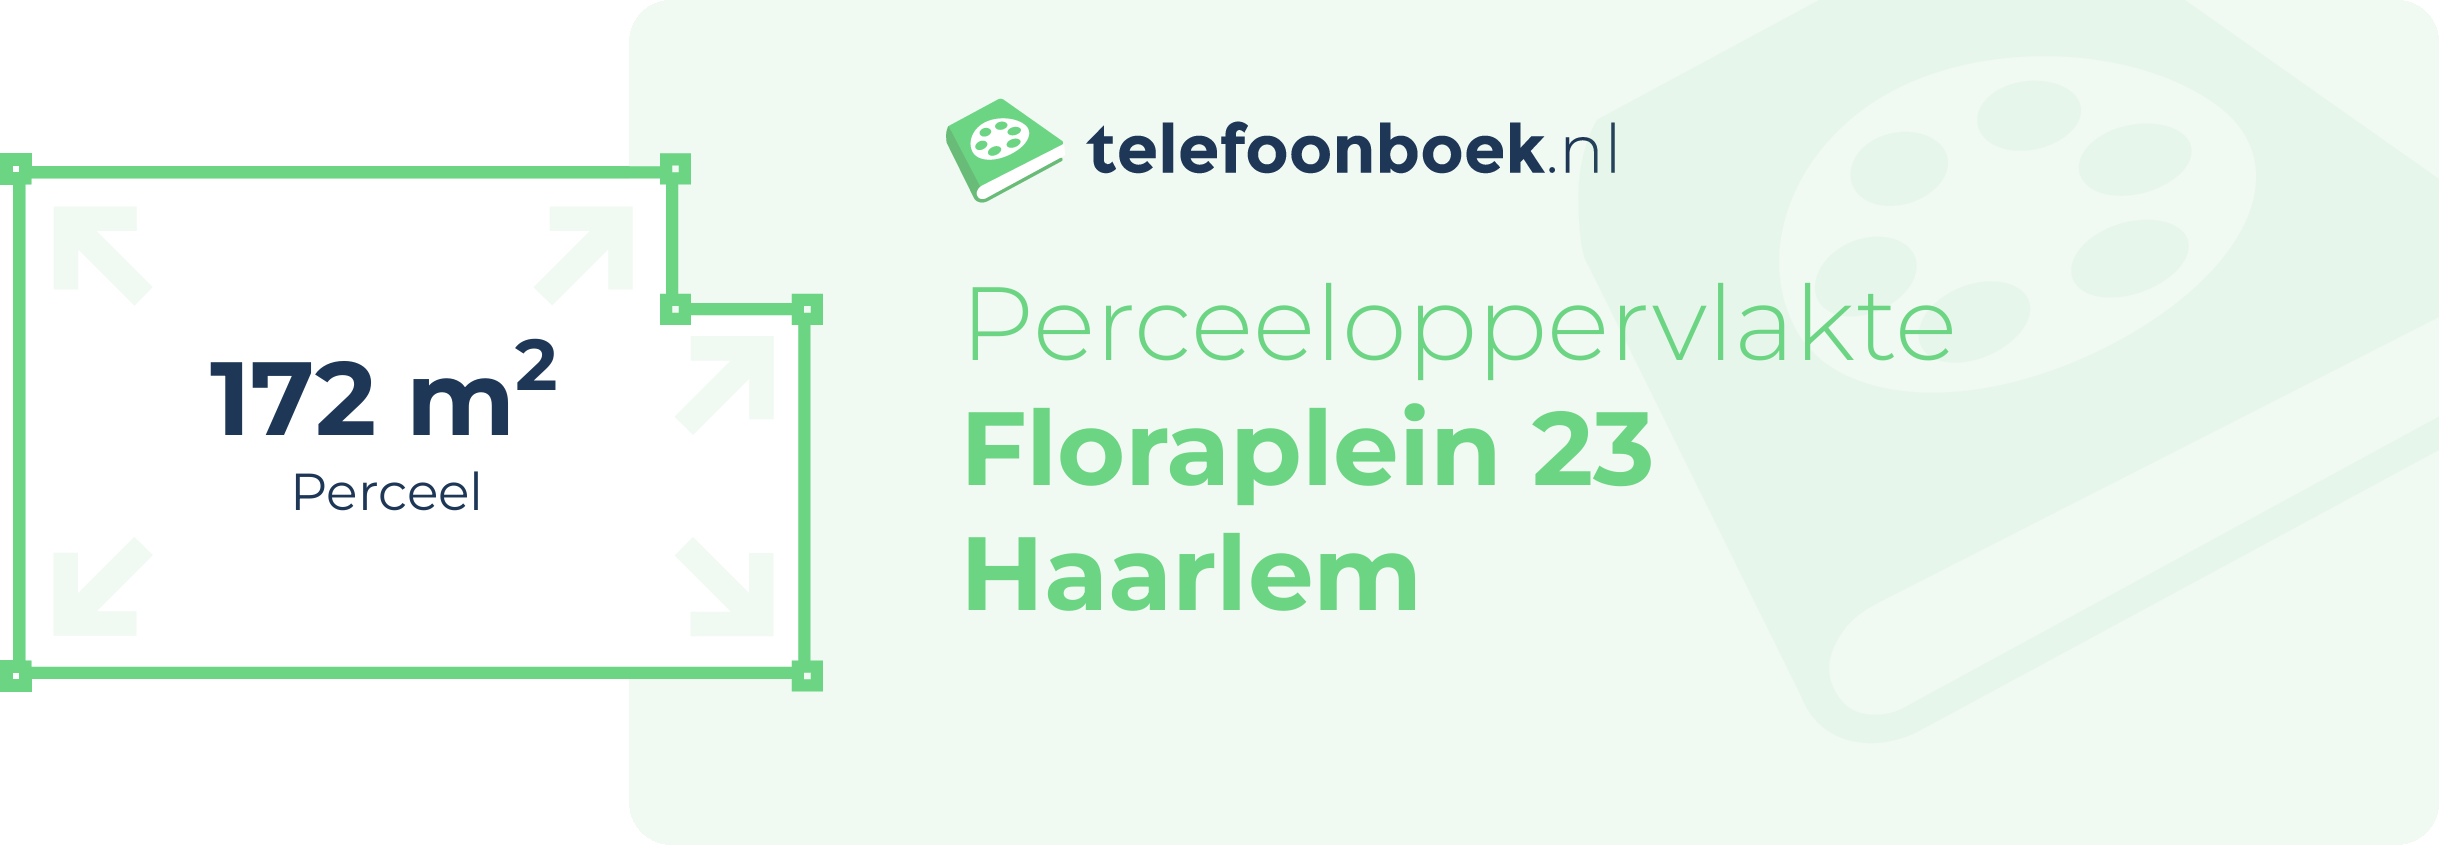 Perceeloppervlakte Floraplein 23 Haarlem